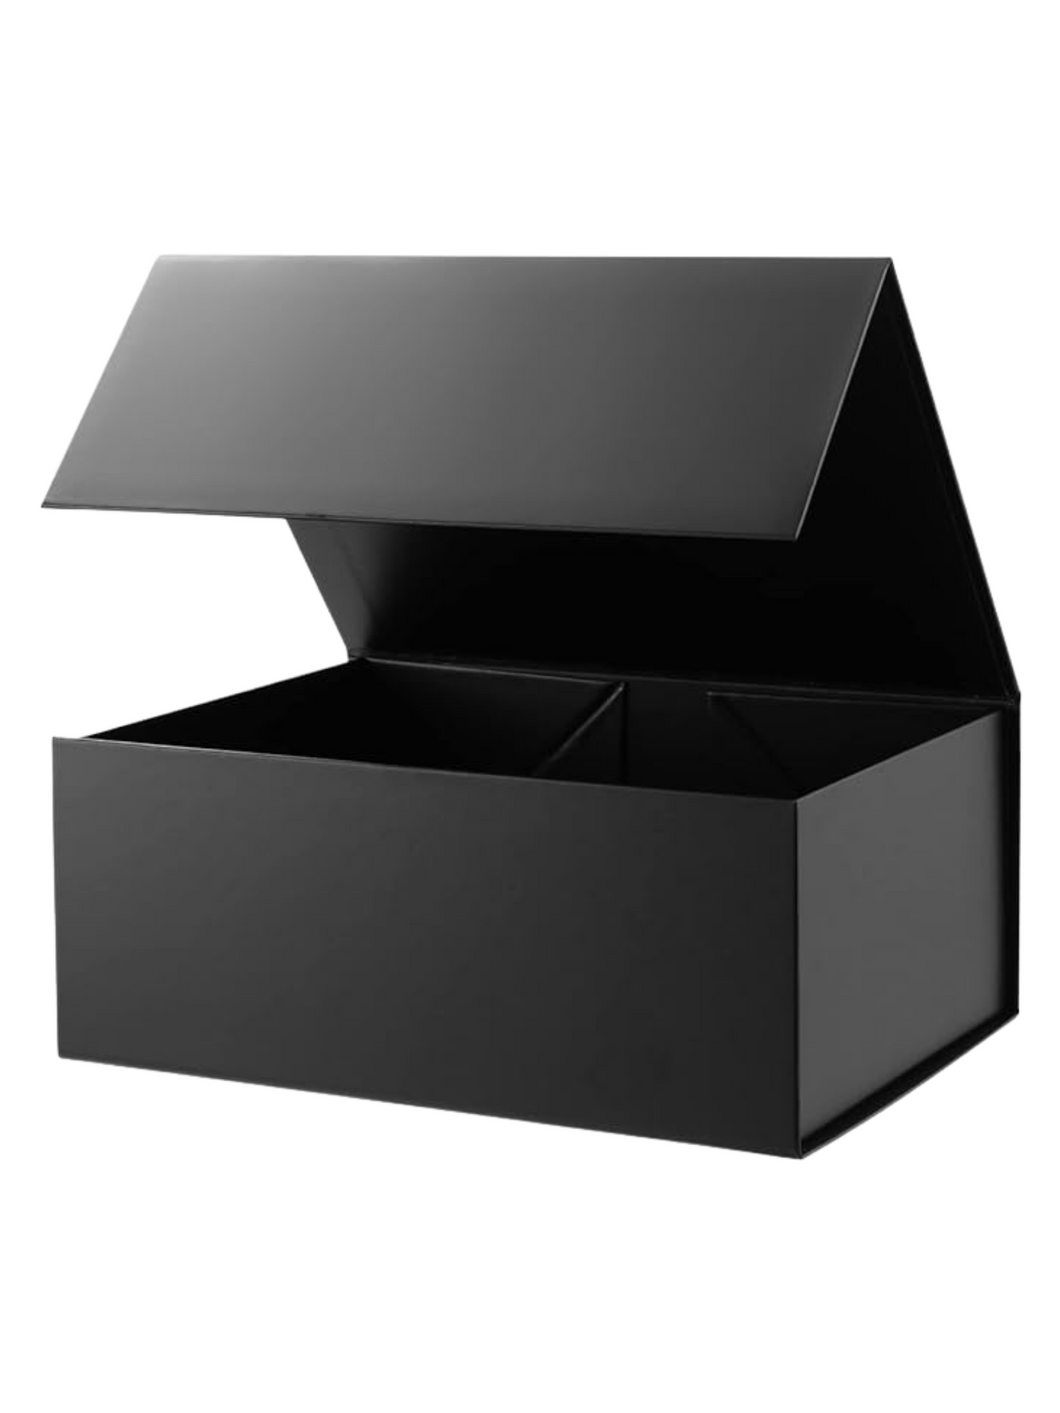 LOGO GIFT BOXES - EMPTY